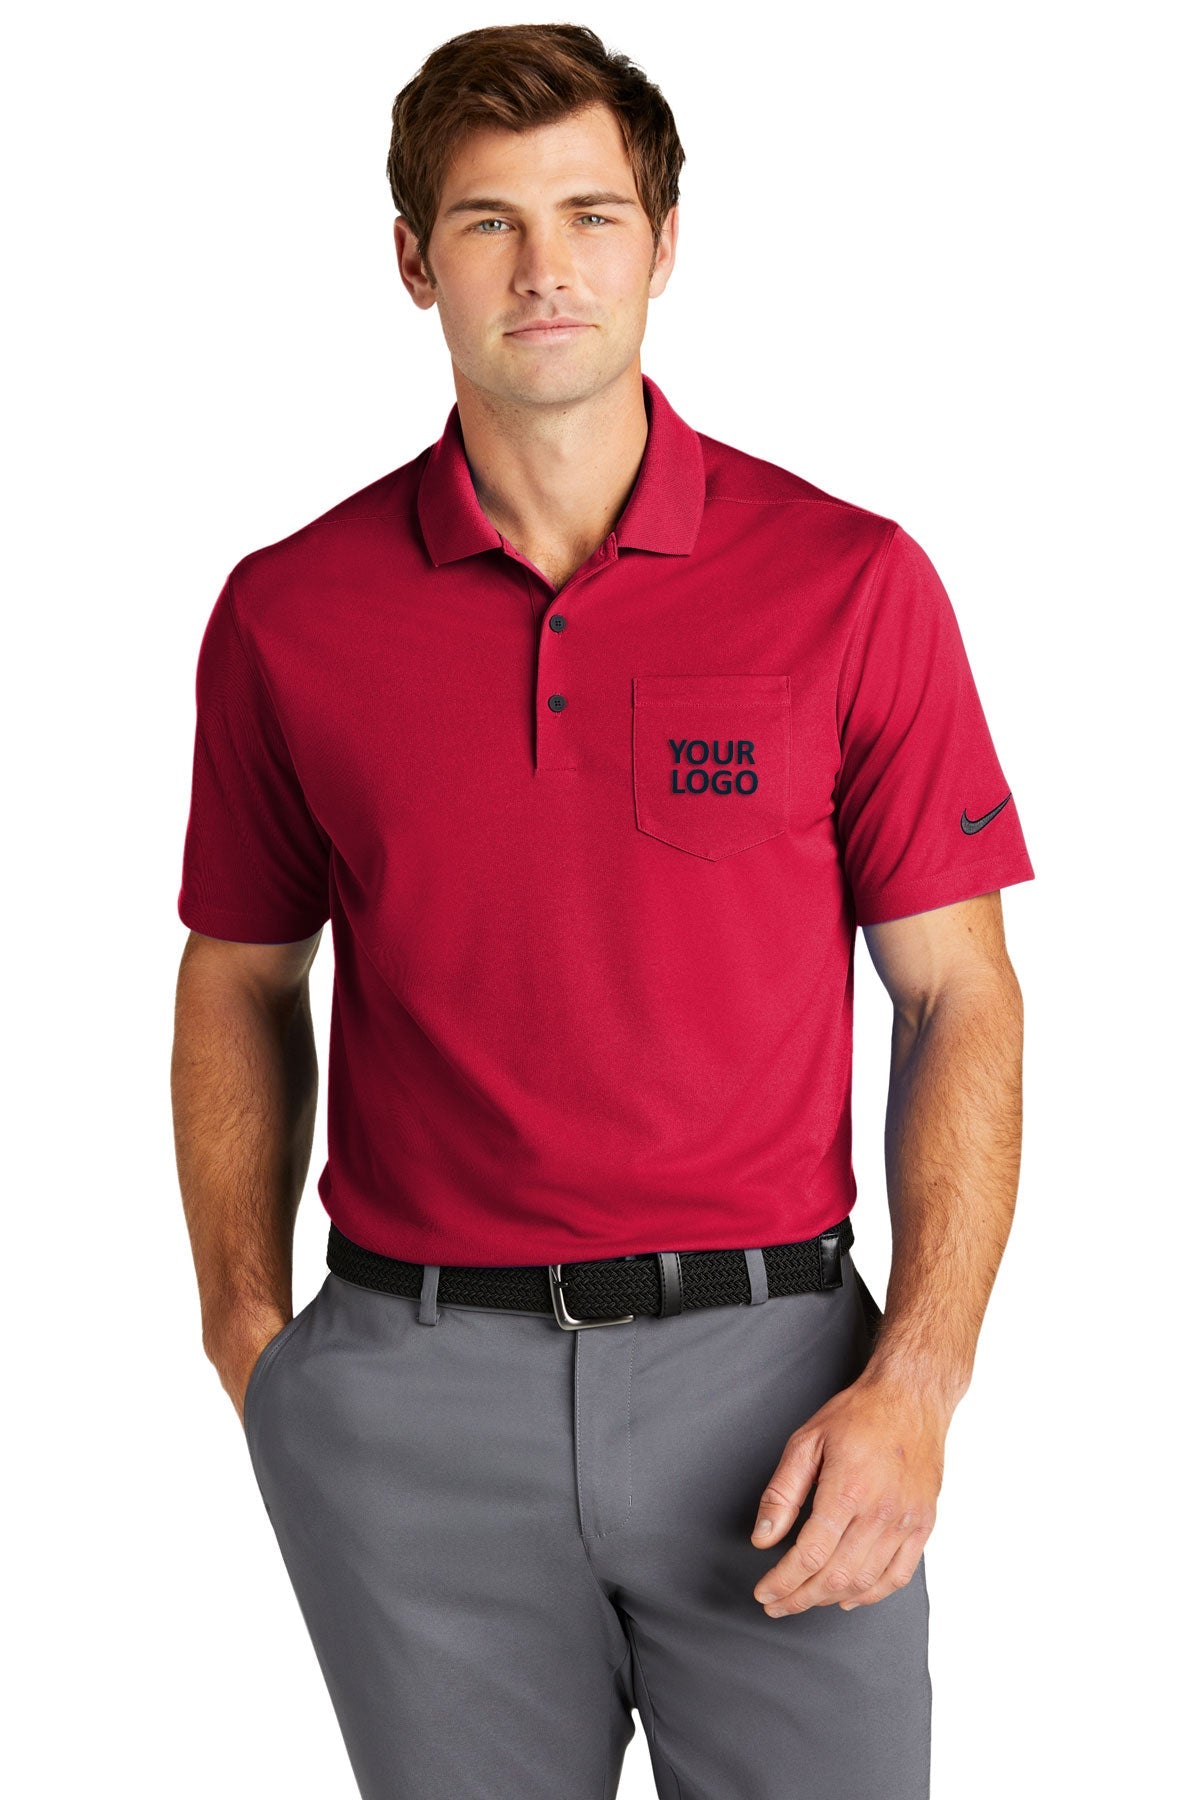 Nike University Red NKDC2103 custom logo polo shirts embroidered